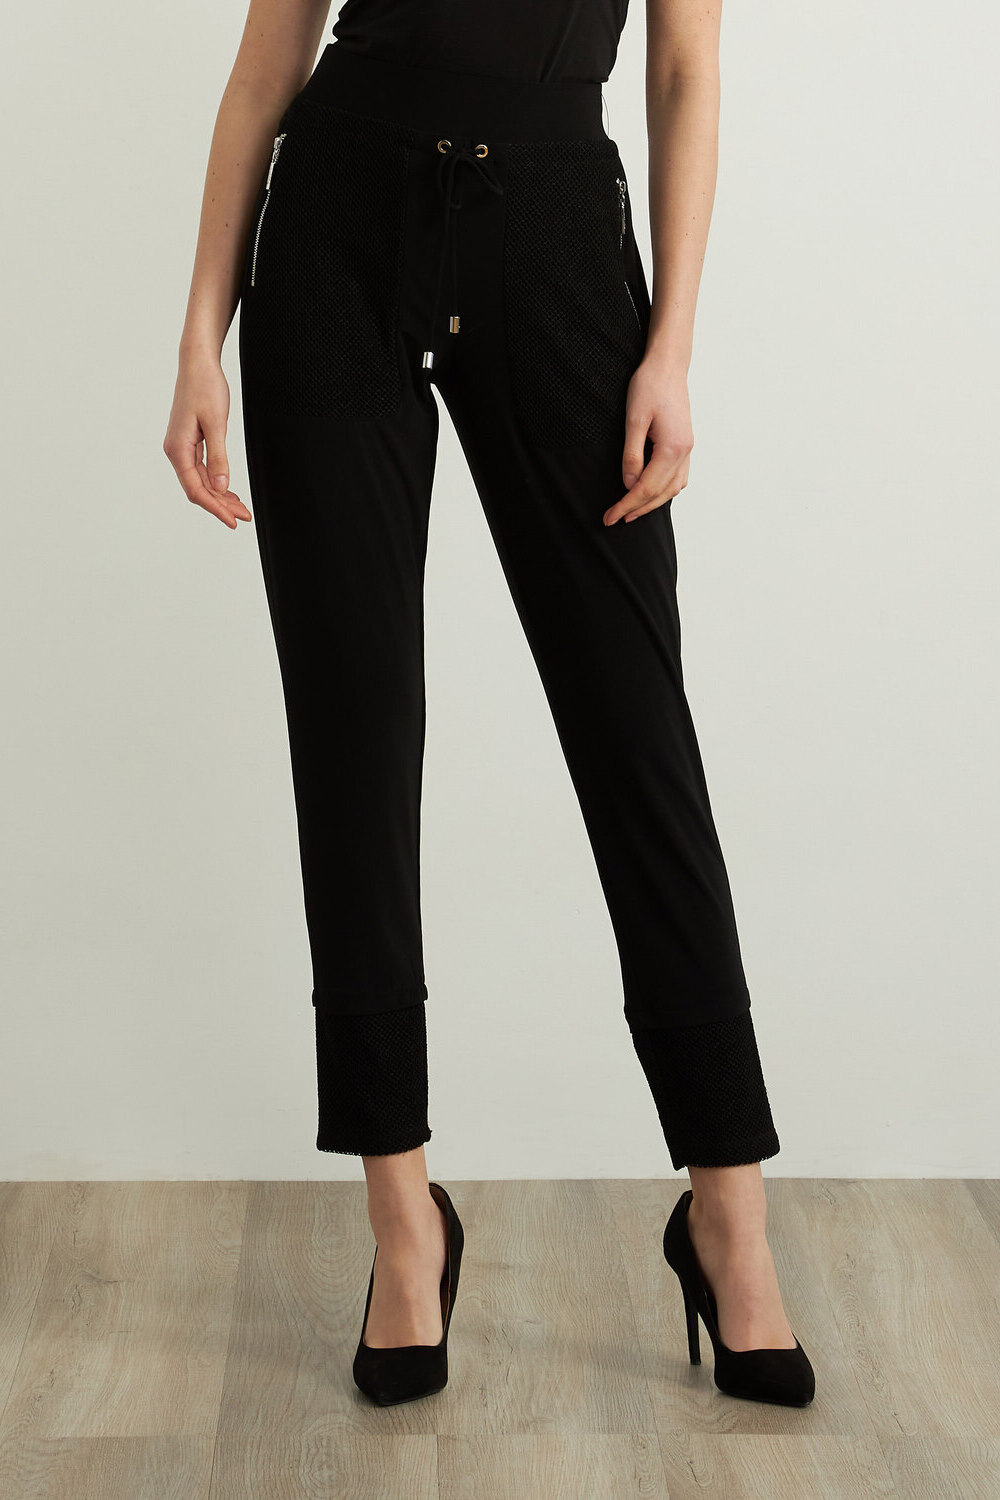 Joseph Ribkoff Slim Leg Pants Style 213653. Black